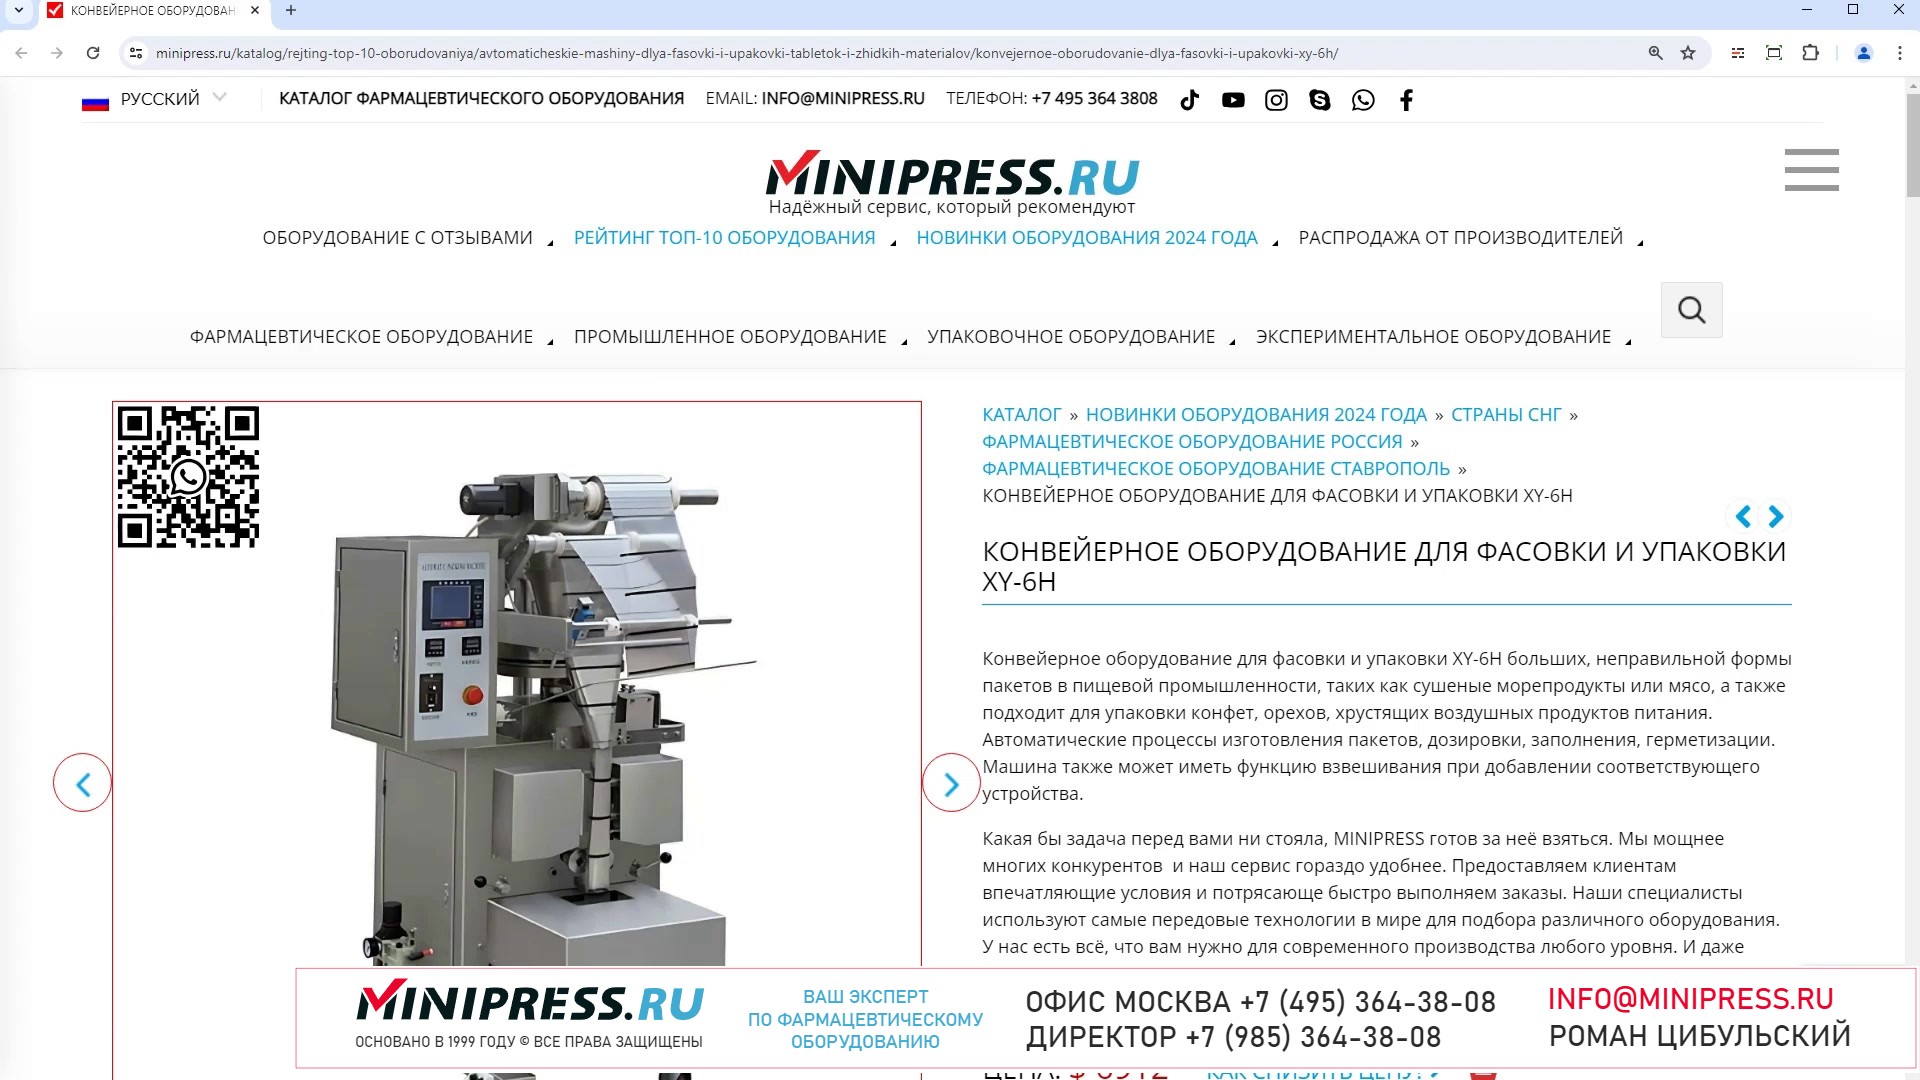 Minipress.ru Конвейерное оборудование для фасовки и упаковки XY-6H